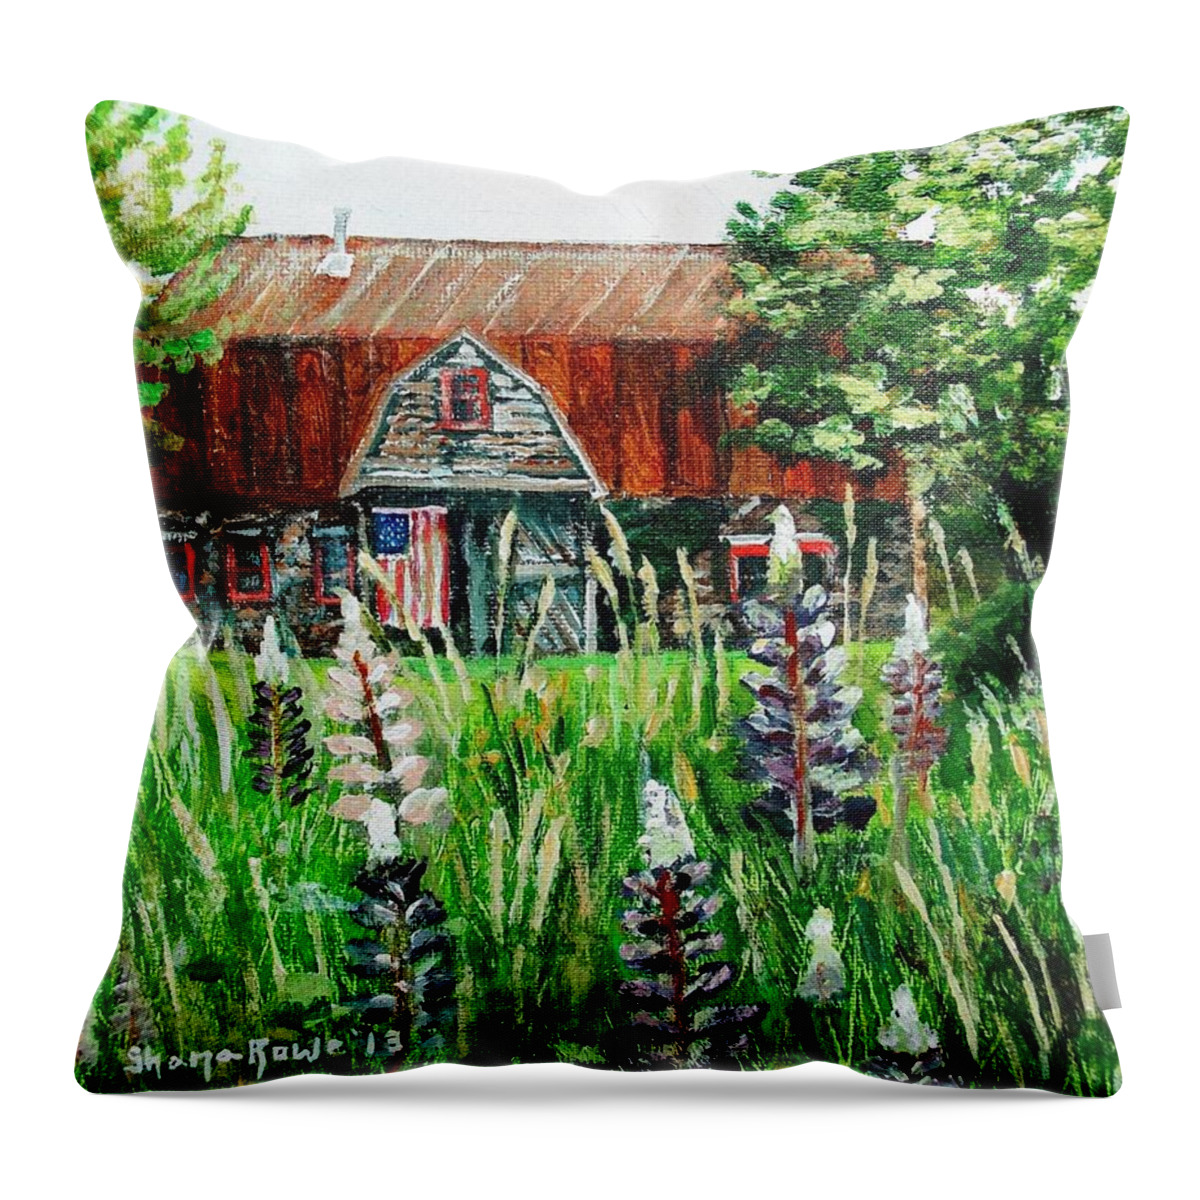 Barn Throw Pillow featuring the painting American Barn by Shana Rowe Jackson